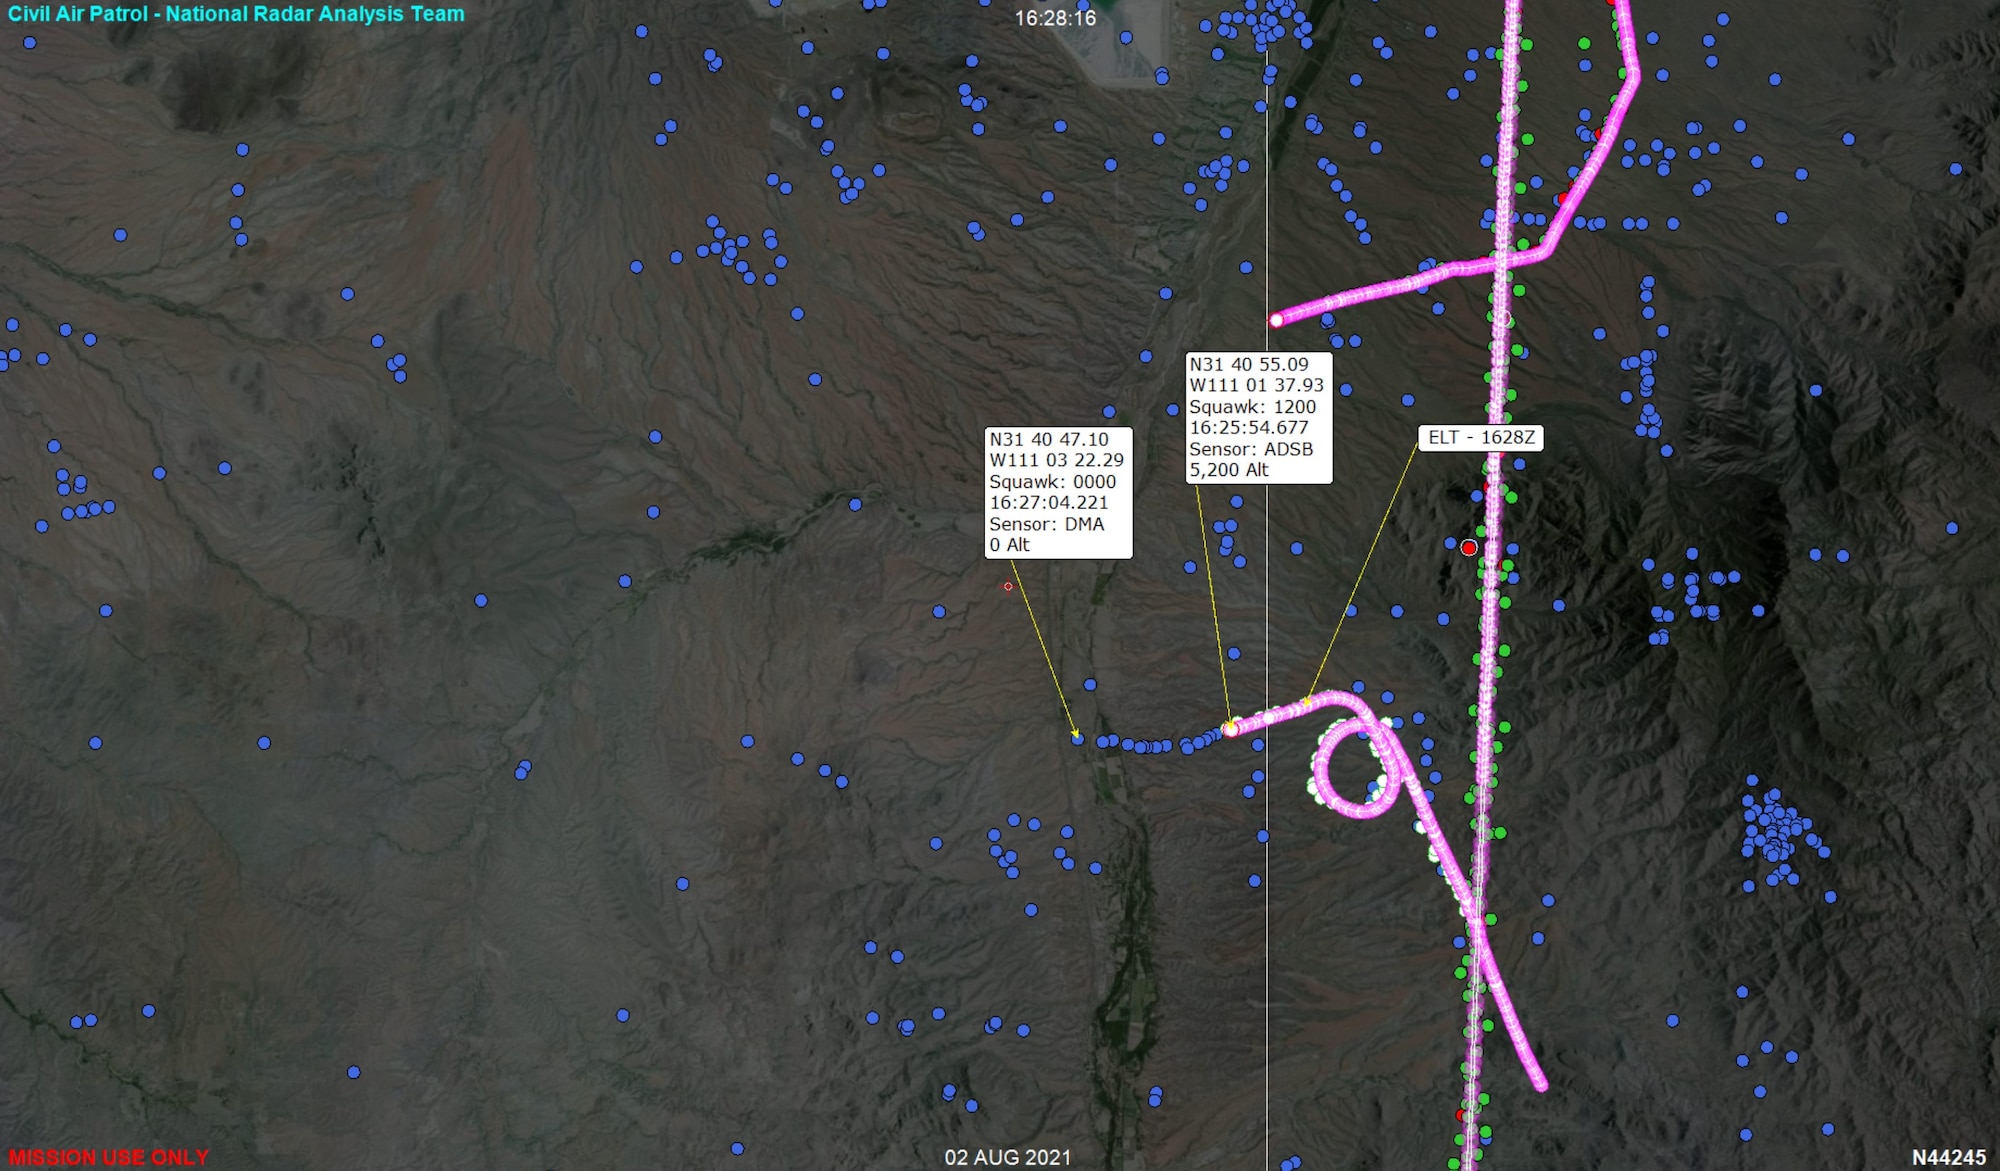 Screenshot from computer showing aircraft flight path